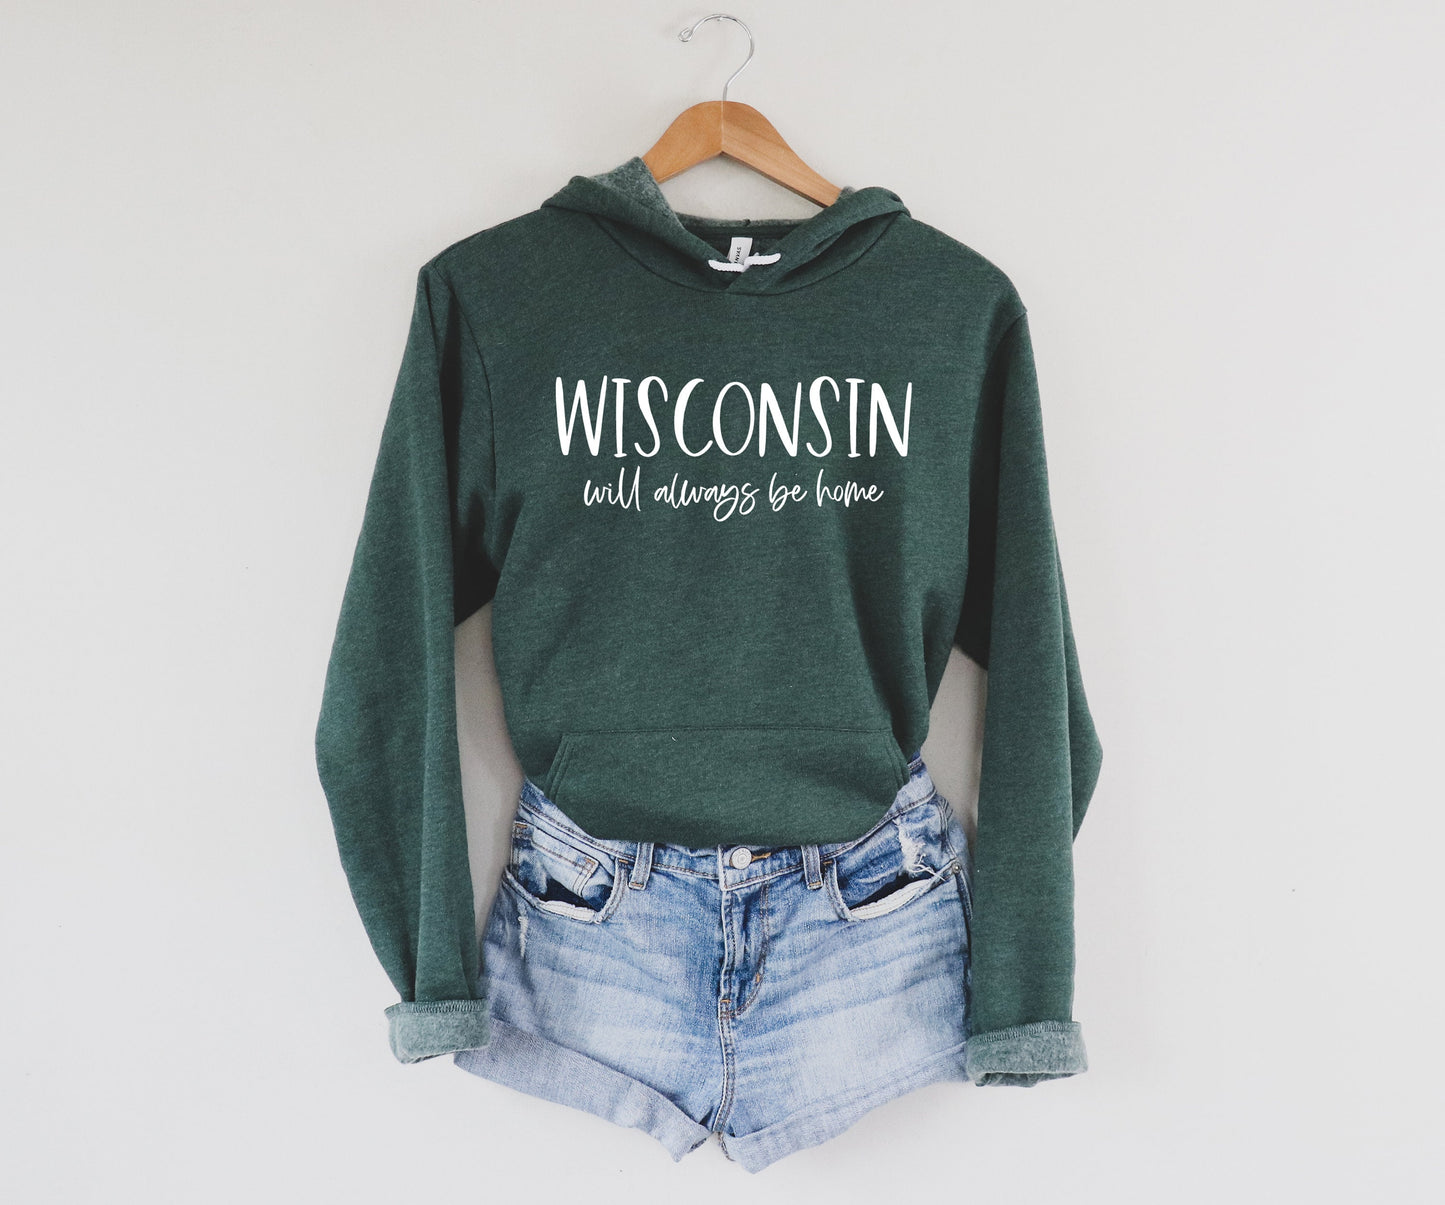 Wisconsin Is Home Hooded Sweatshirt